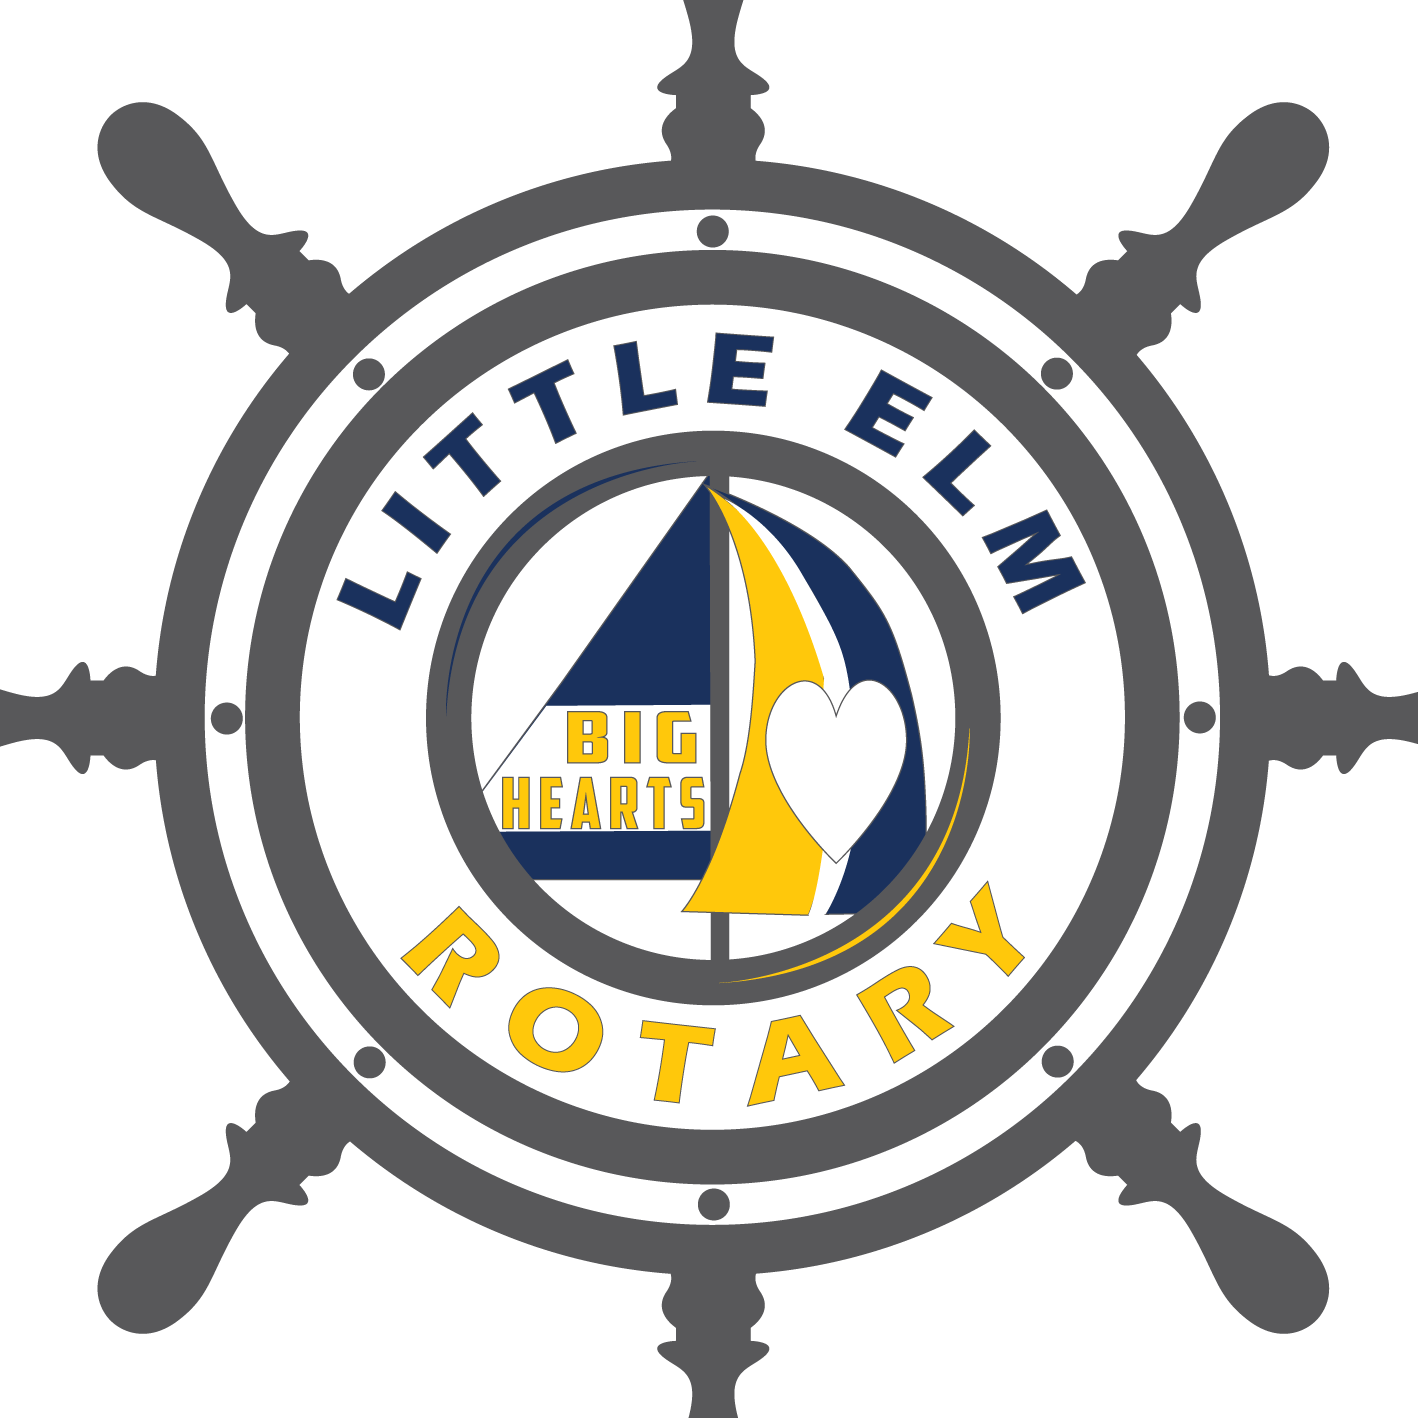 LITTLE ELM ROTARY CLUB